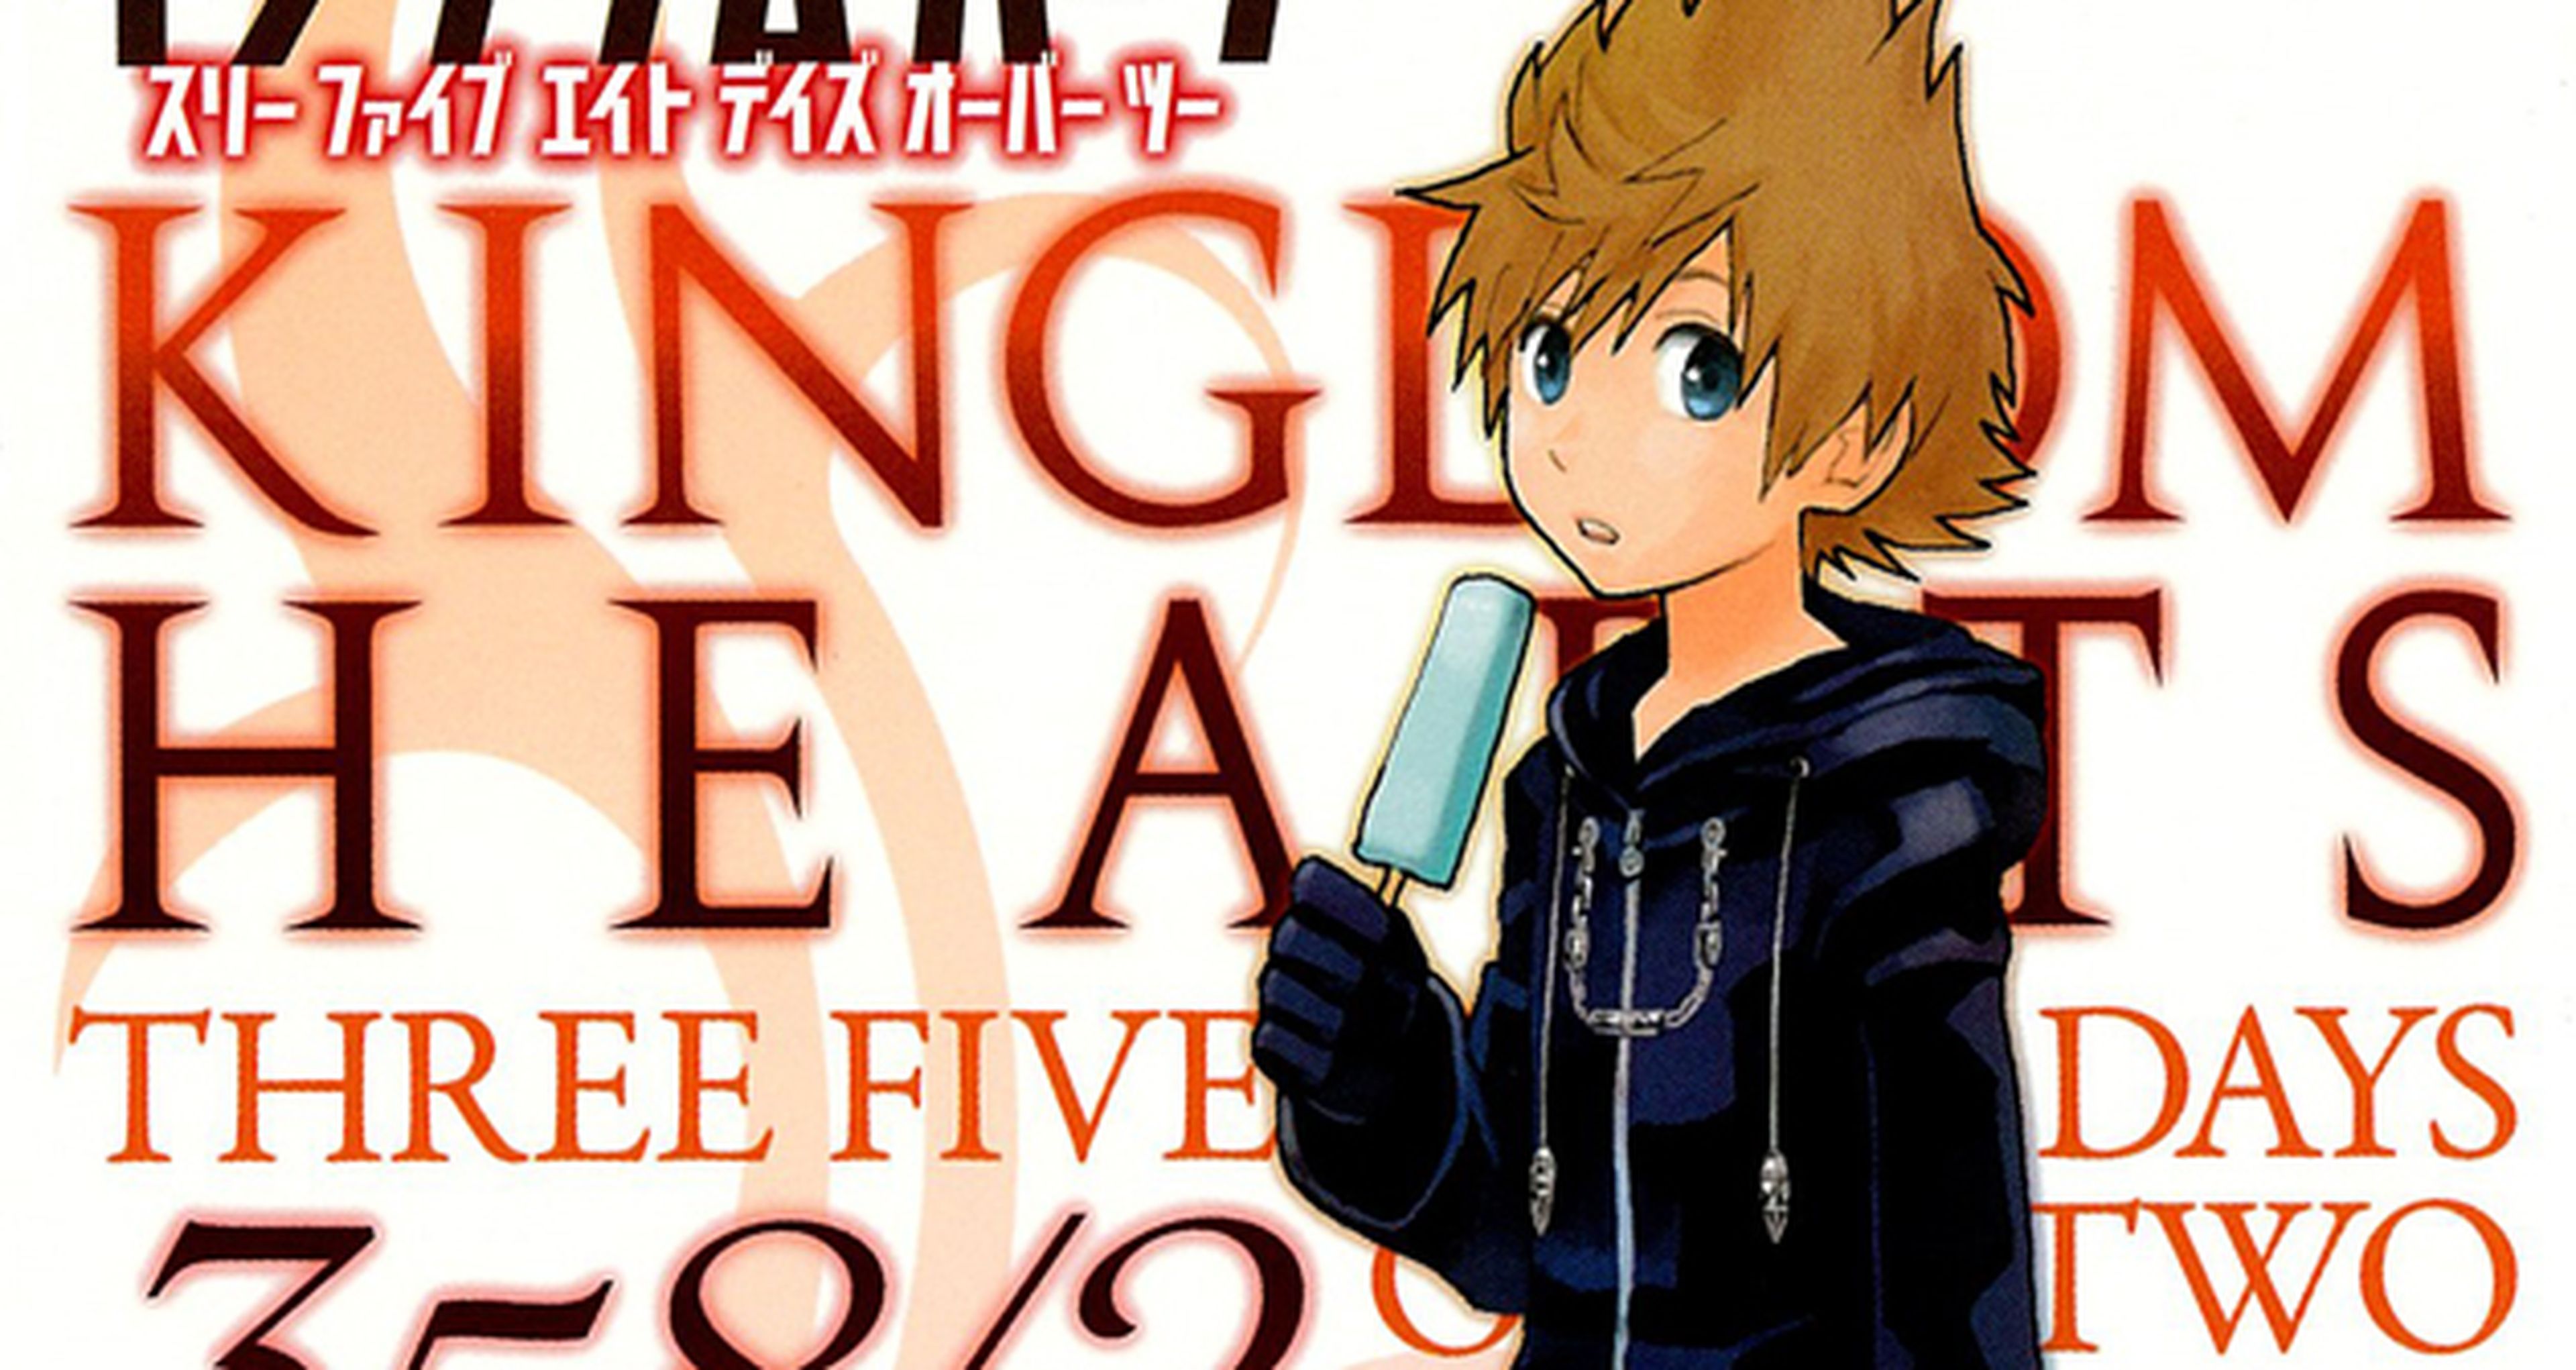 El manga Kingdom Hearts 358/2 Days, en julio